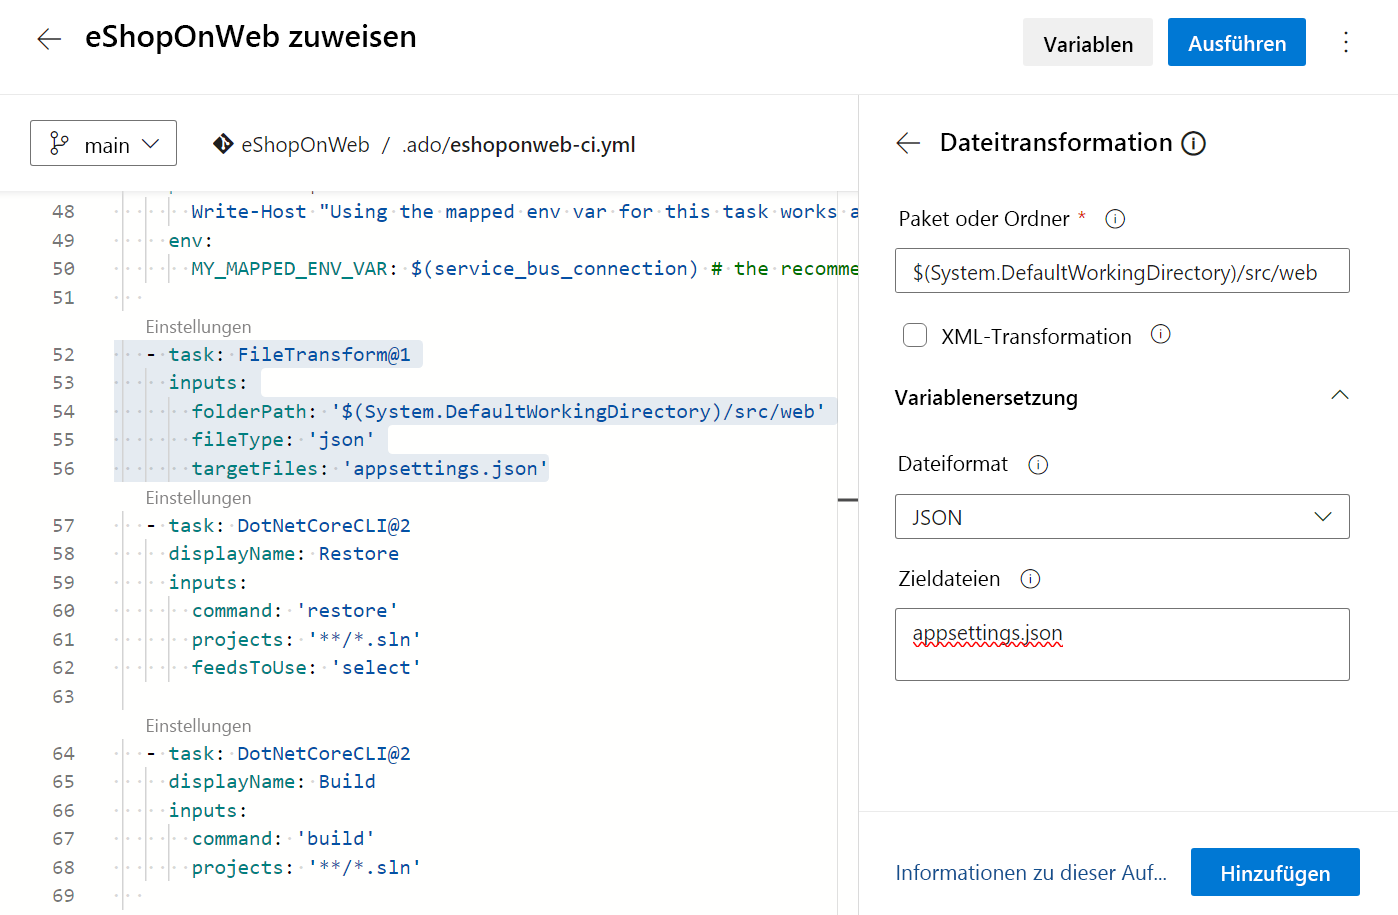 Screenshot of Azure DevOps showing the new task File Transform in the eshoponweb-ci.yml file.